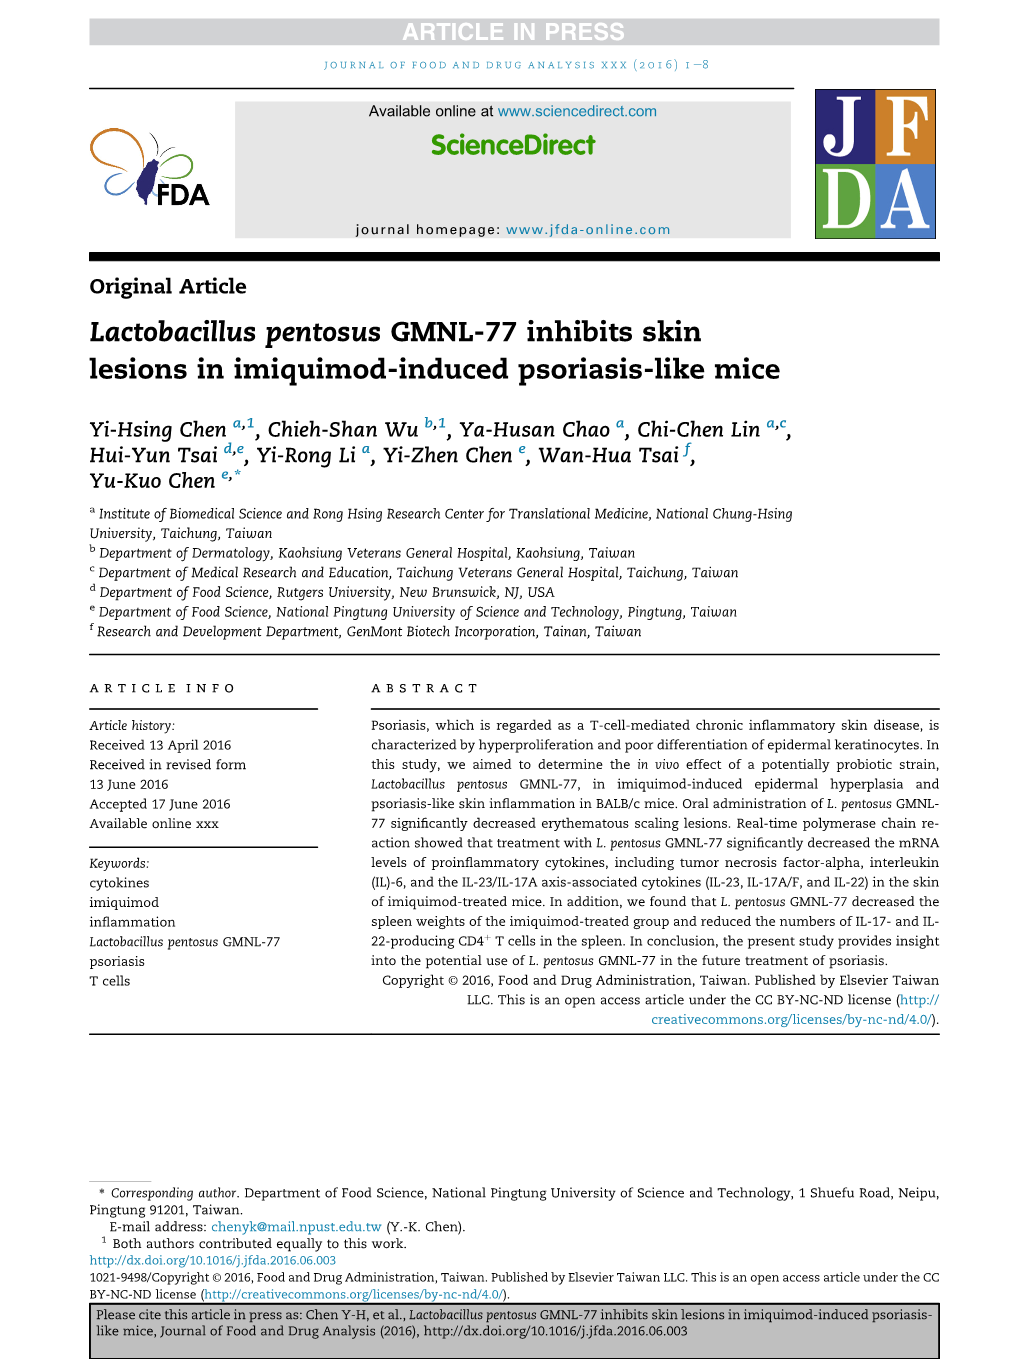 Lactobacillus Pentosus GMNL-77 Inhibits Skin Lesions in Imiquimod-Induced Psoriasis-Like Mice